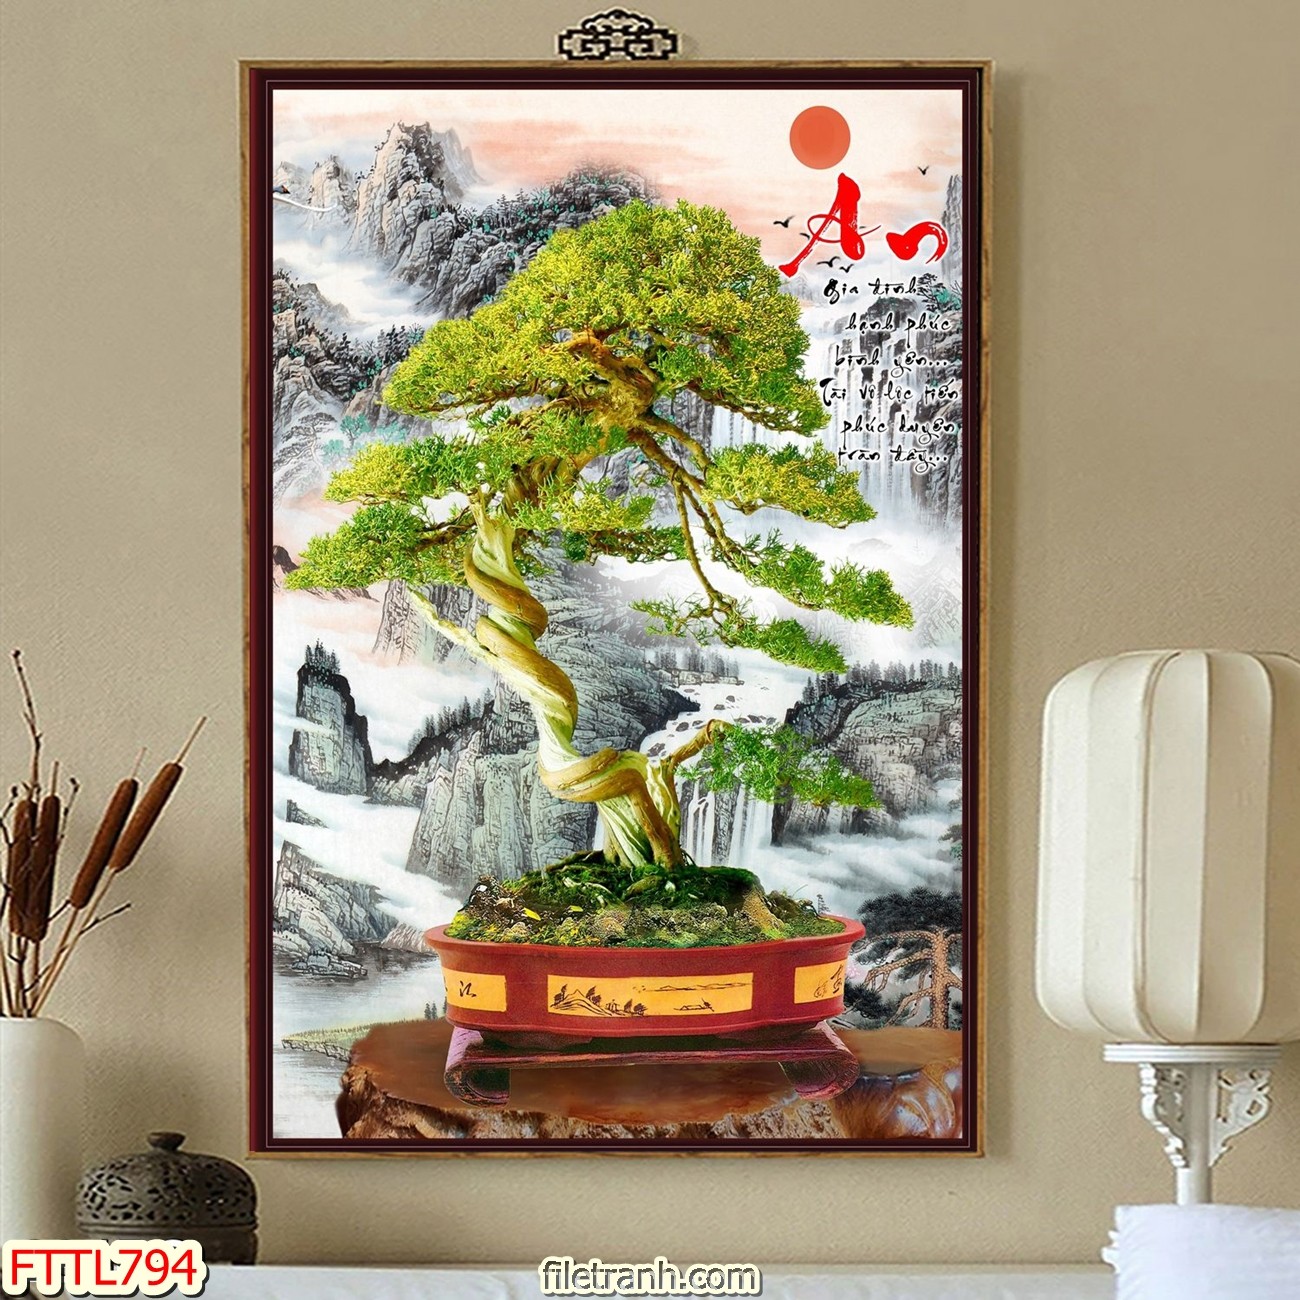 https://filetranh.com/file-tranh-chau-mai-bonsai/file-tranh-chau-mai-bonsai-fttl794.html